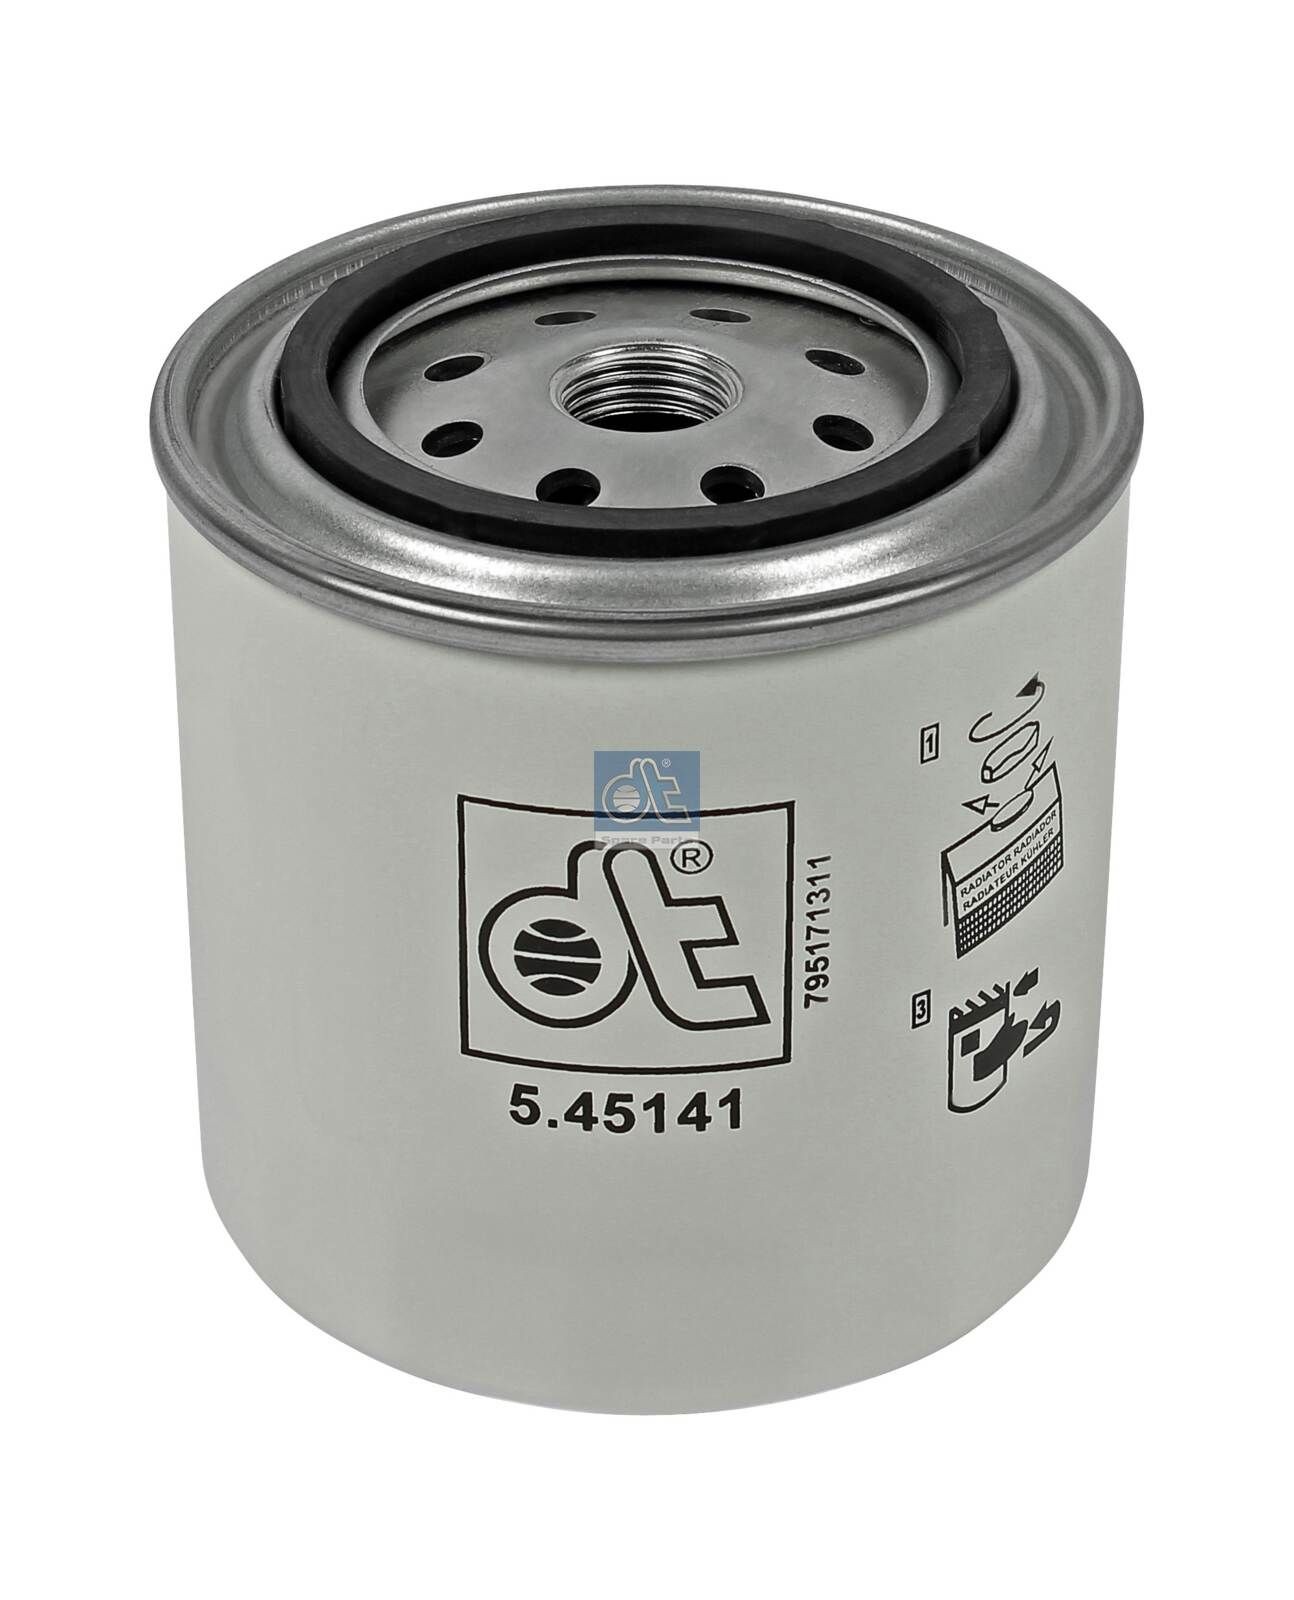 WA 940/1 DT Spare Parts 5.45141 Coolant Filter 402 9120